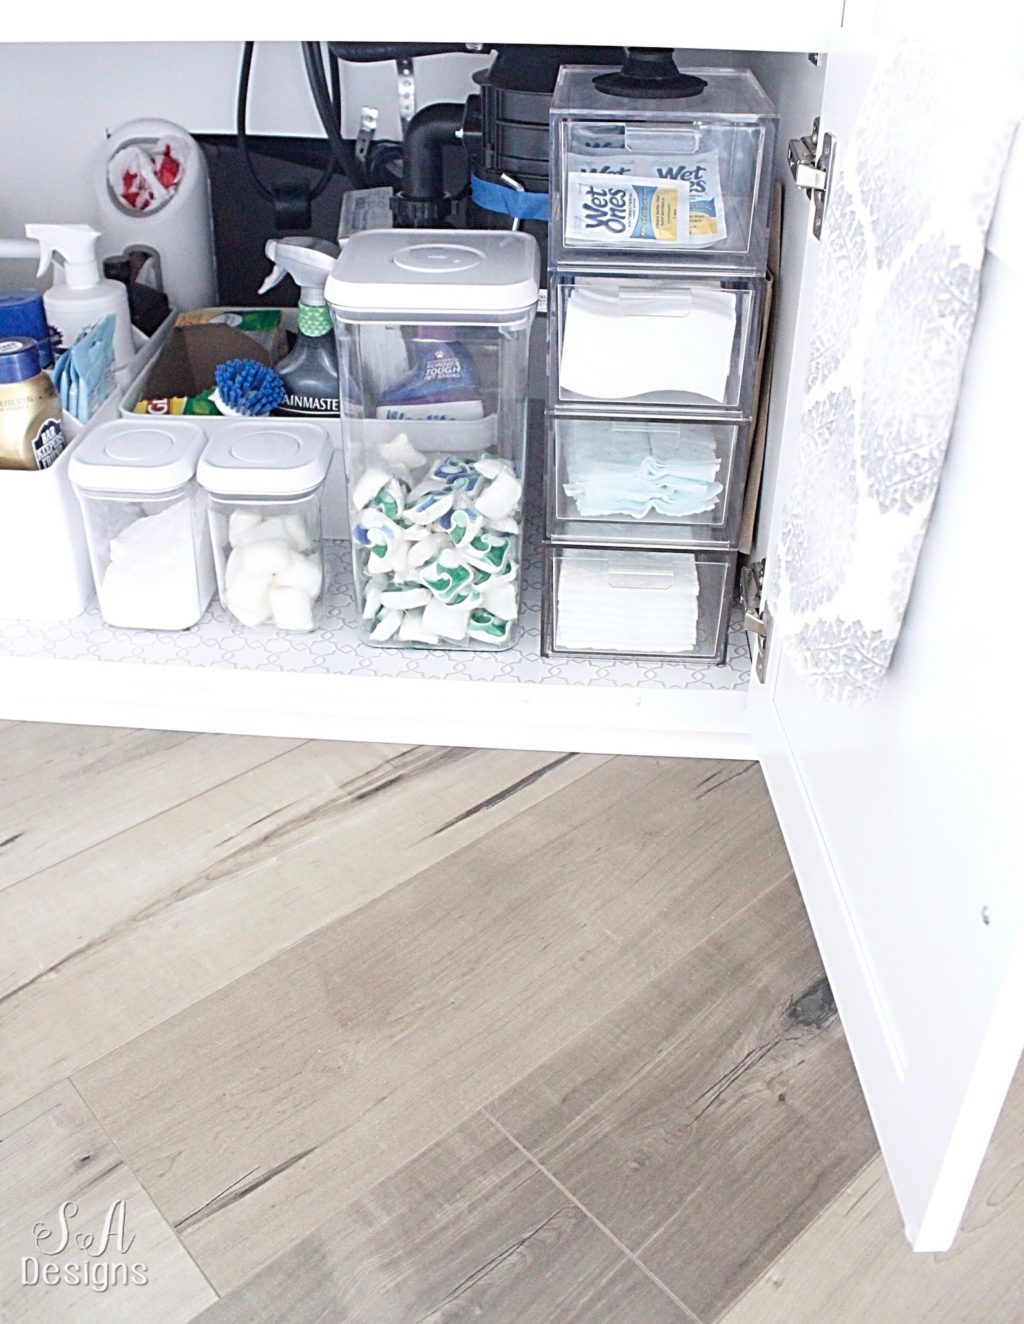 https://summeradams.com/wp-content/uploads/2018/01/How-To-Beautifully-Organize-Under-Your-Kitchen-Sink-9.jpg